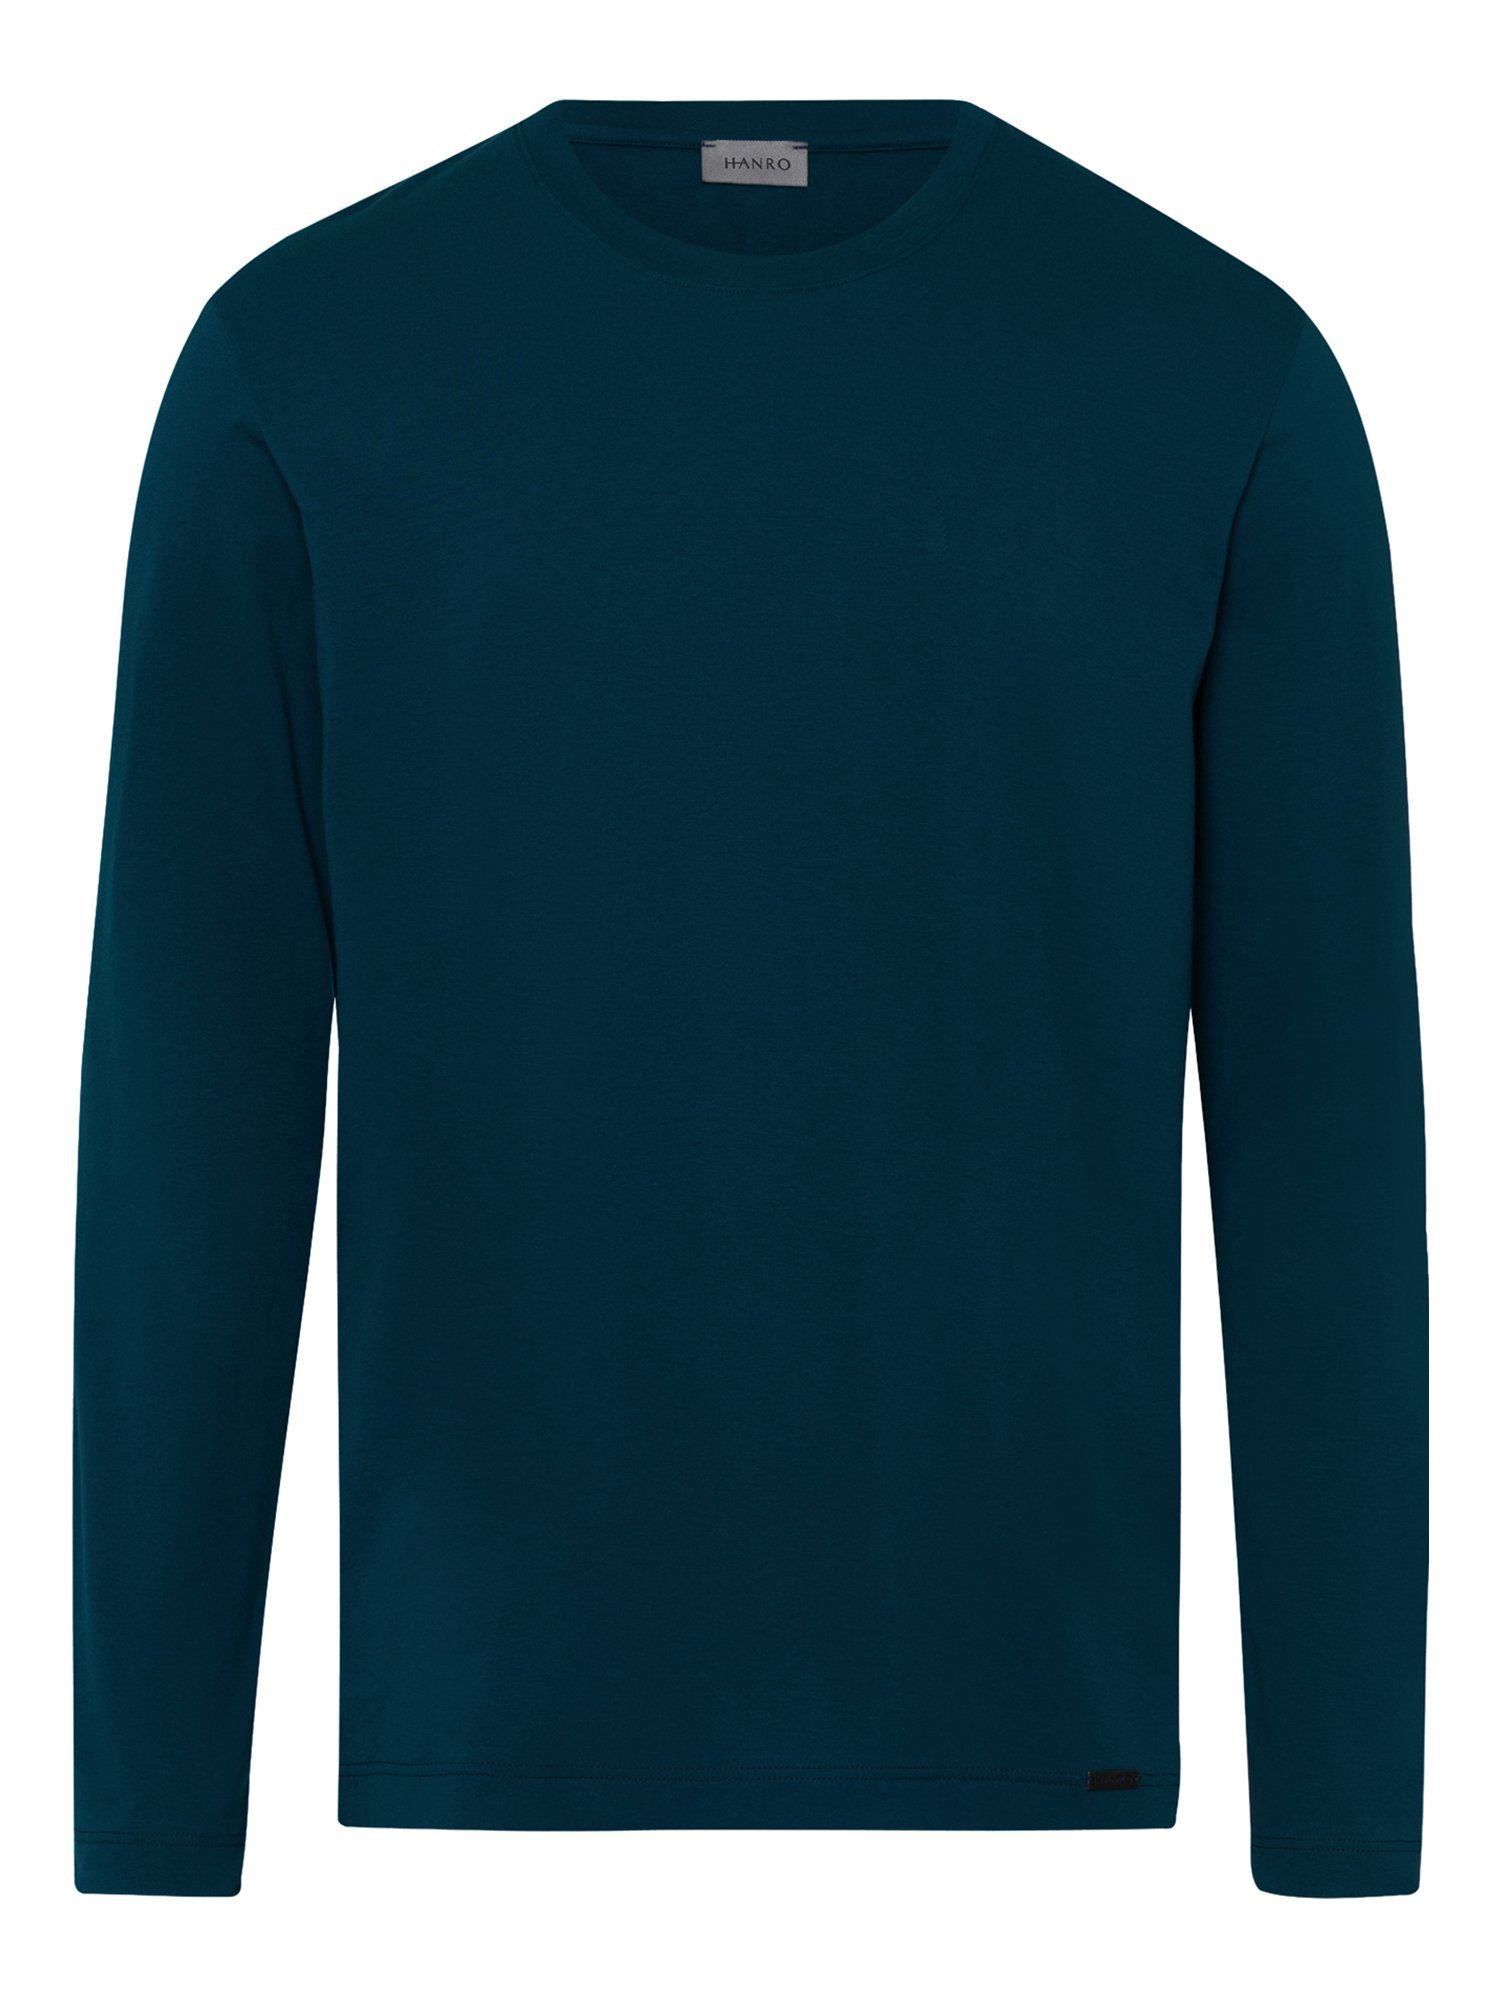 Living blue Hanro Longsleeve Shirts oxford